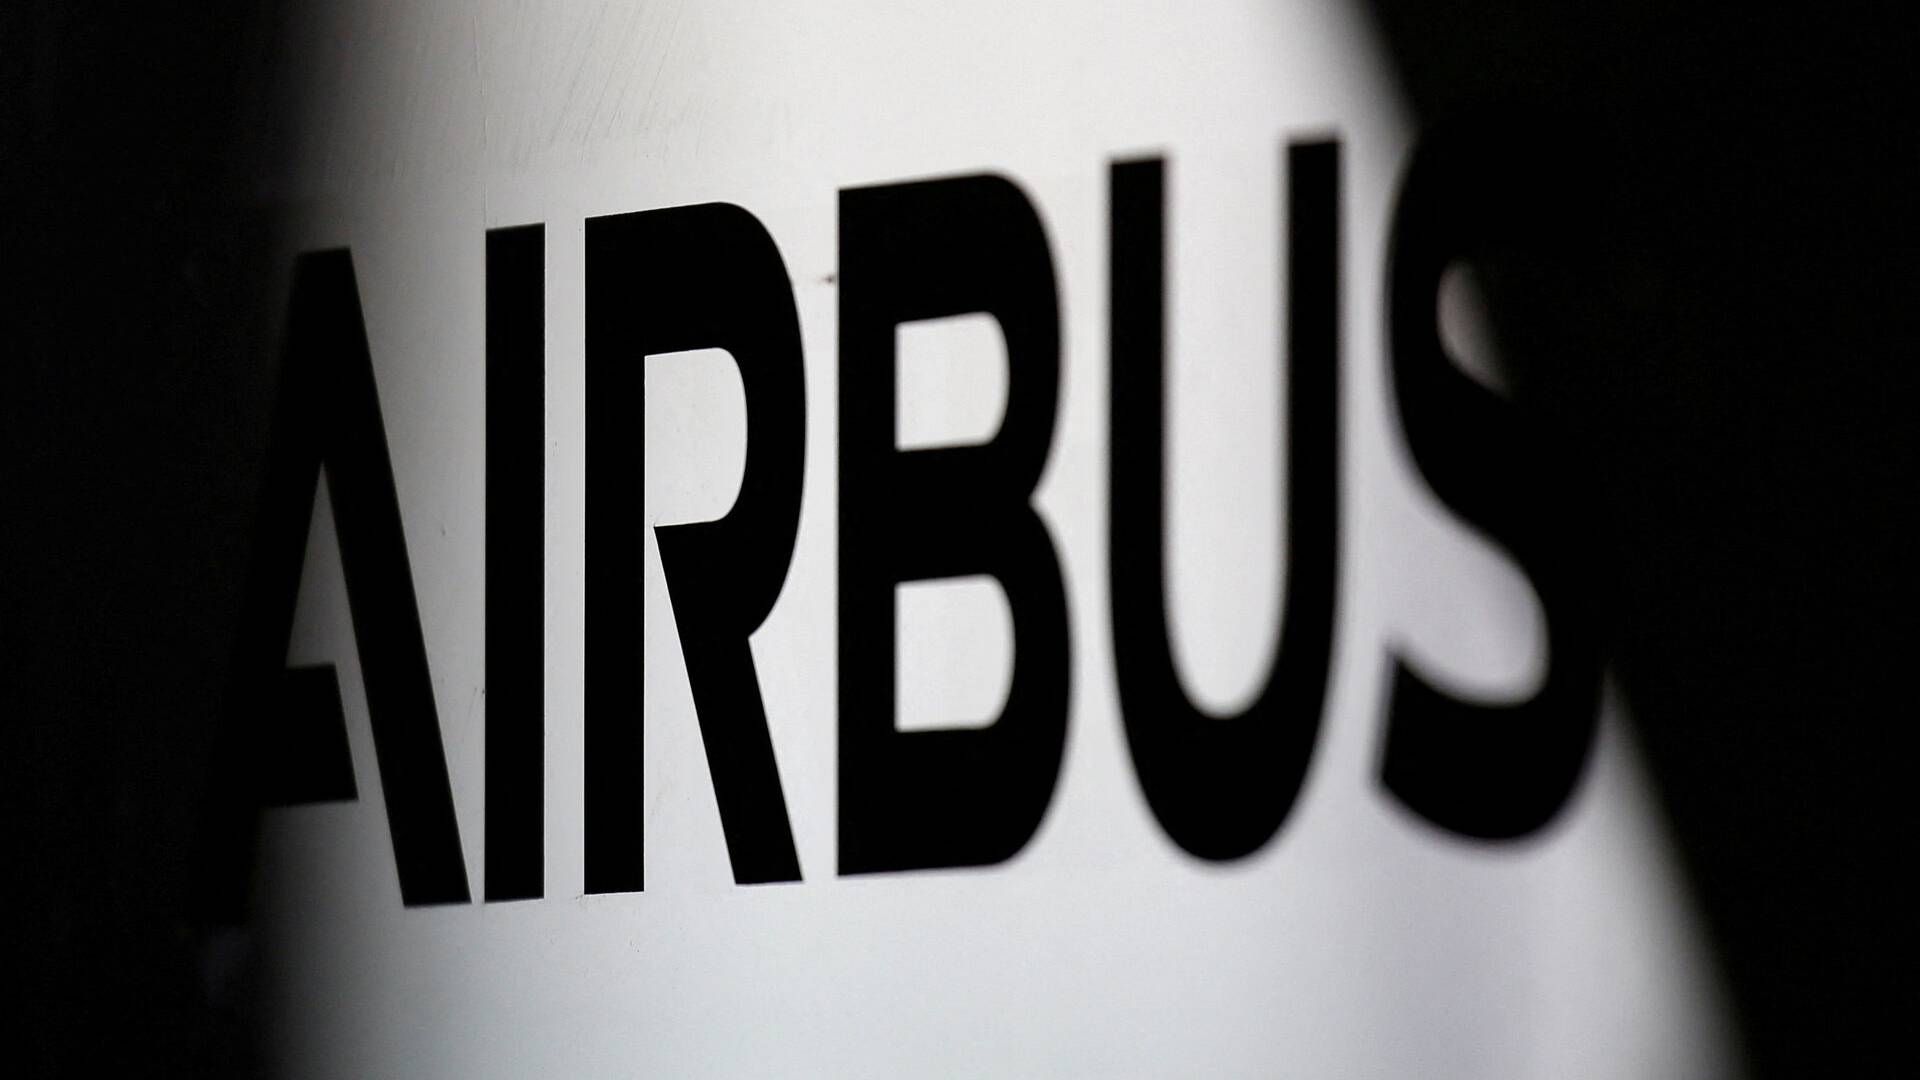 Over 100 af flyene har Airbus leveret i december. | Foto: Regis Duvignau/Reuters/Ritzau Scanpix